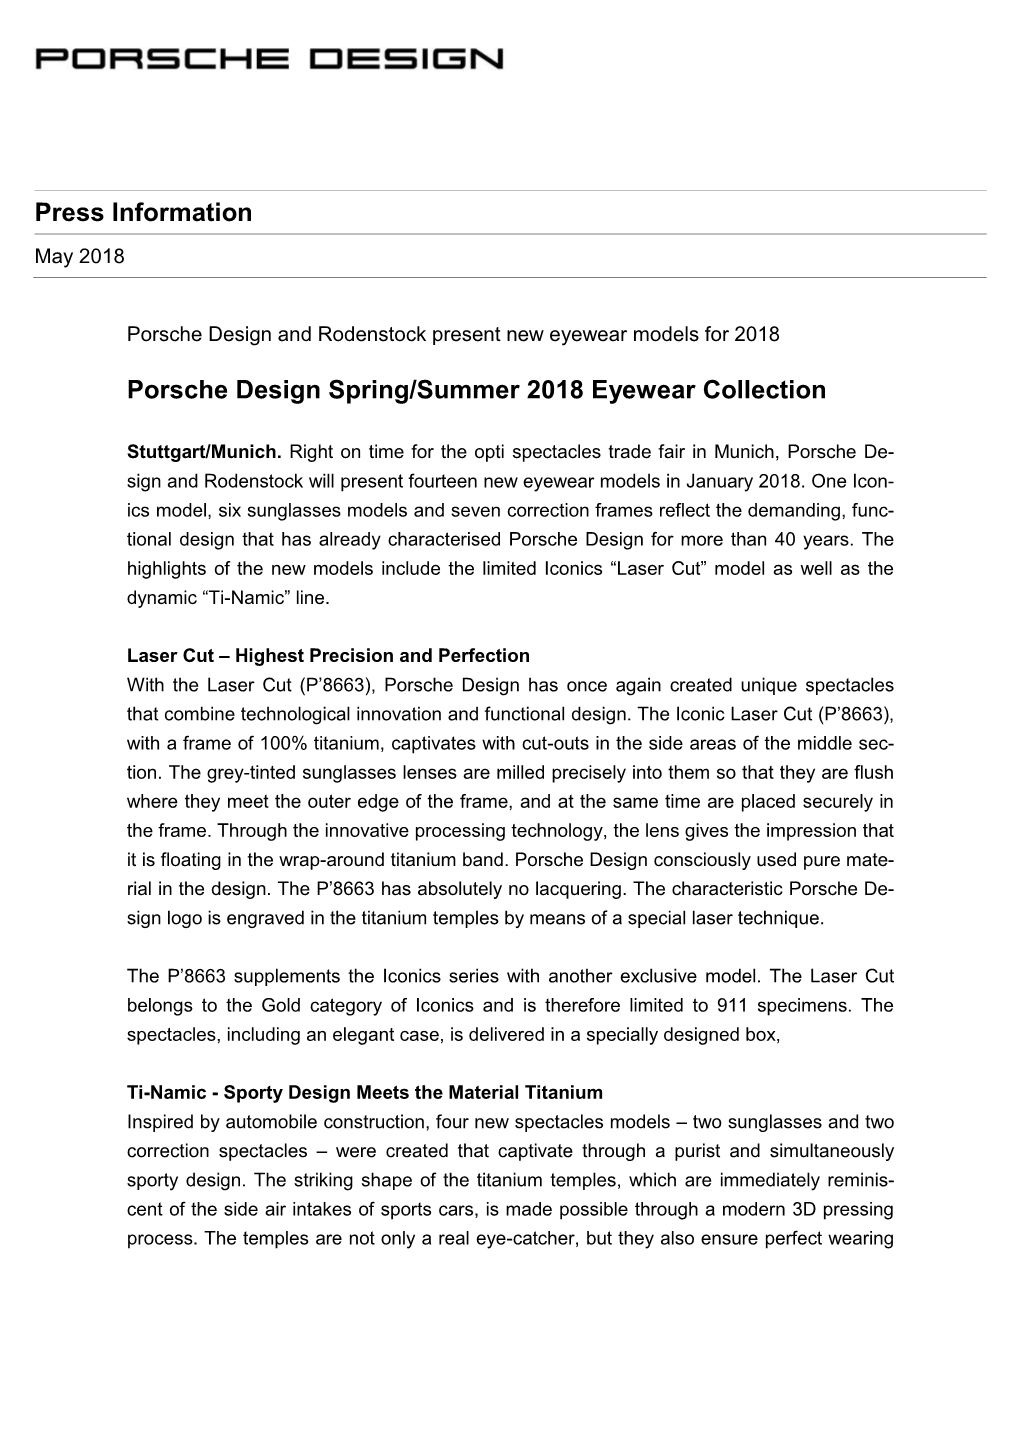 Porsche Design and Rodenstock Present New Eyewear Models for 2018